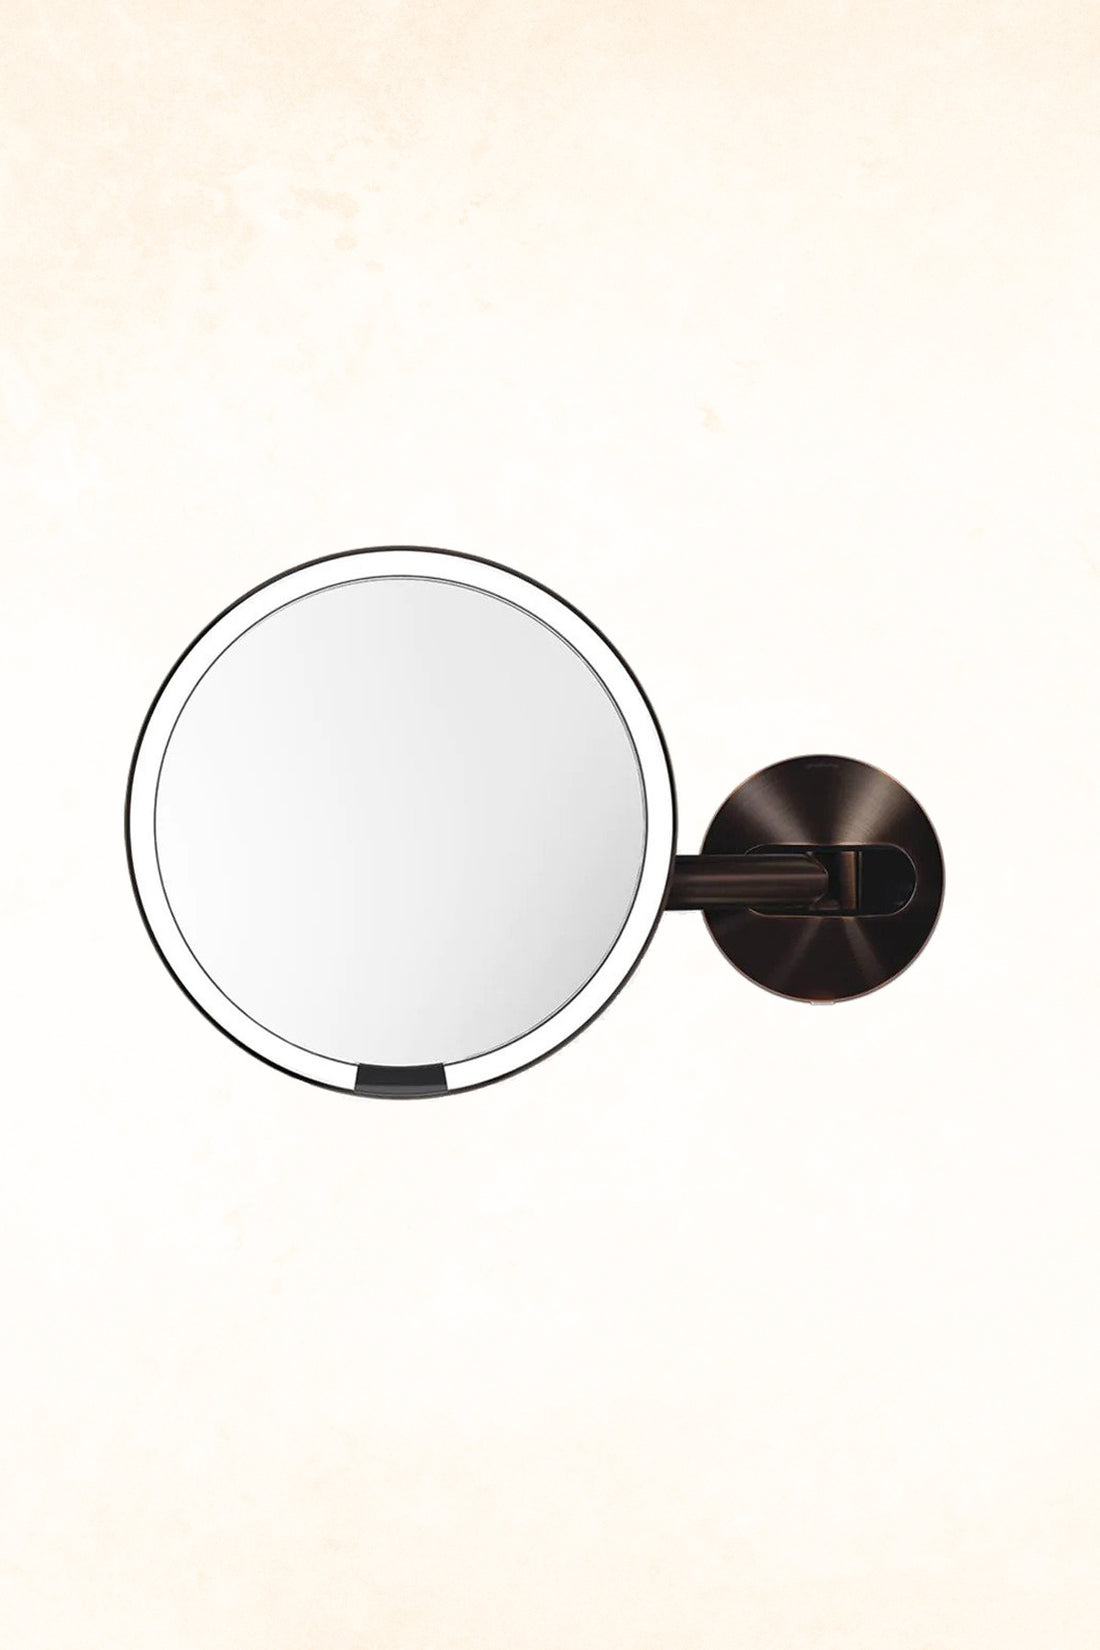 Simplehuman – 20cm sensor mirror - 5 x Magnification - Rechargeable - Dark Bronze